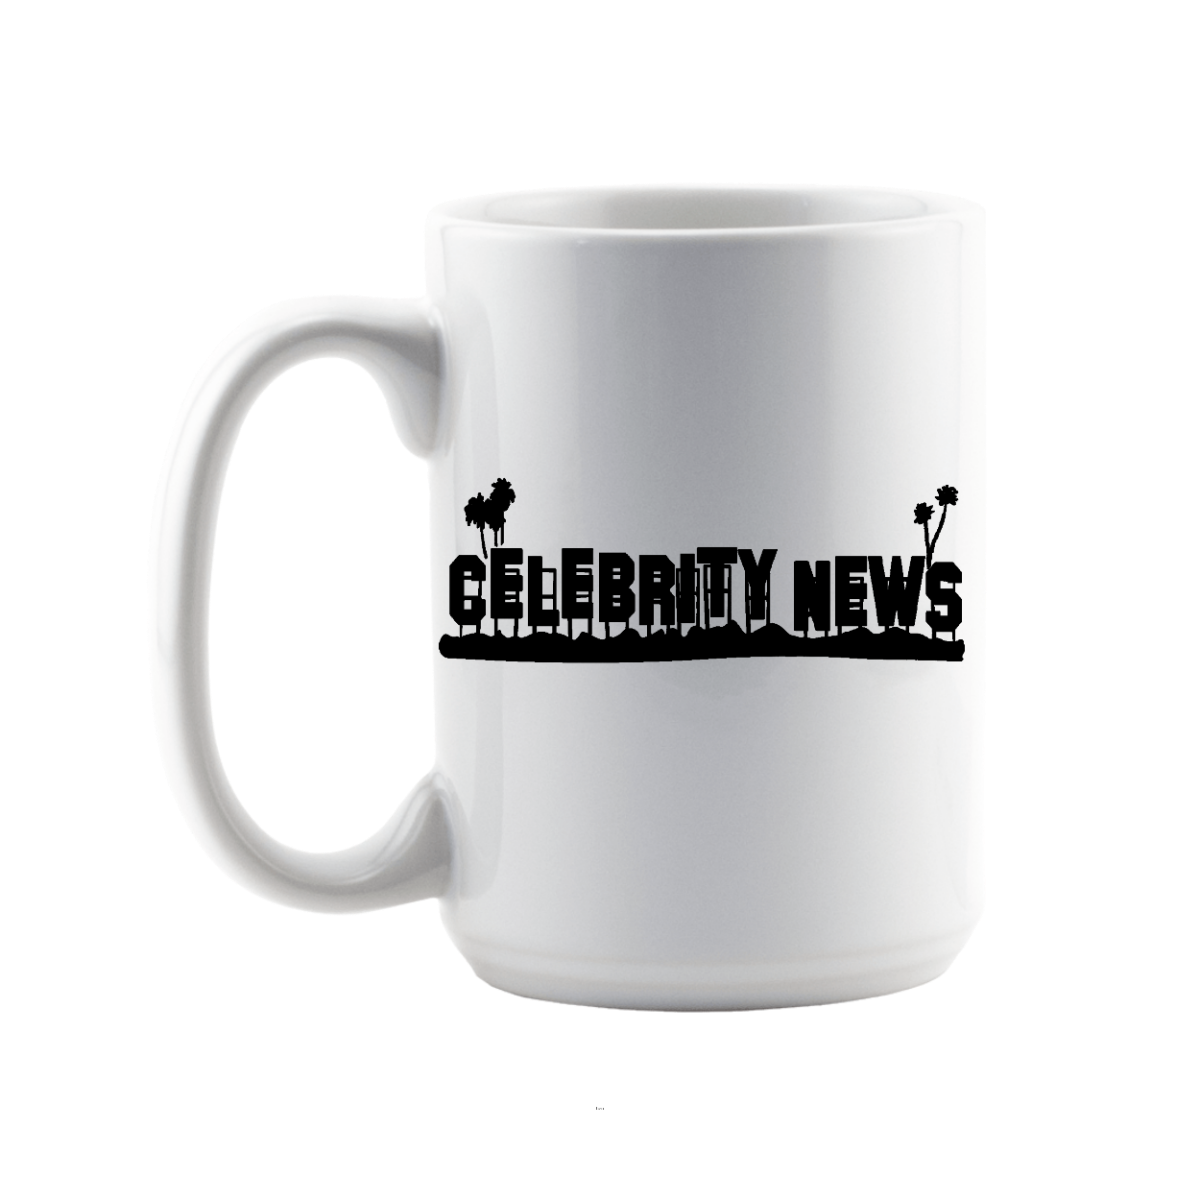 15 oz Celebrity News Coffee Cup